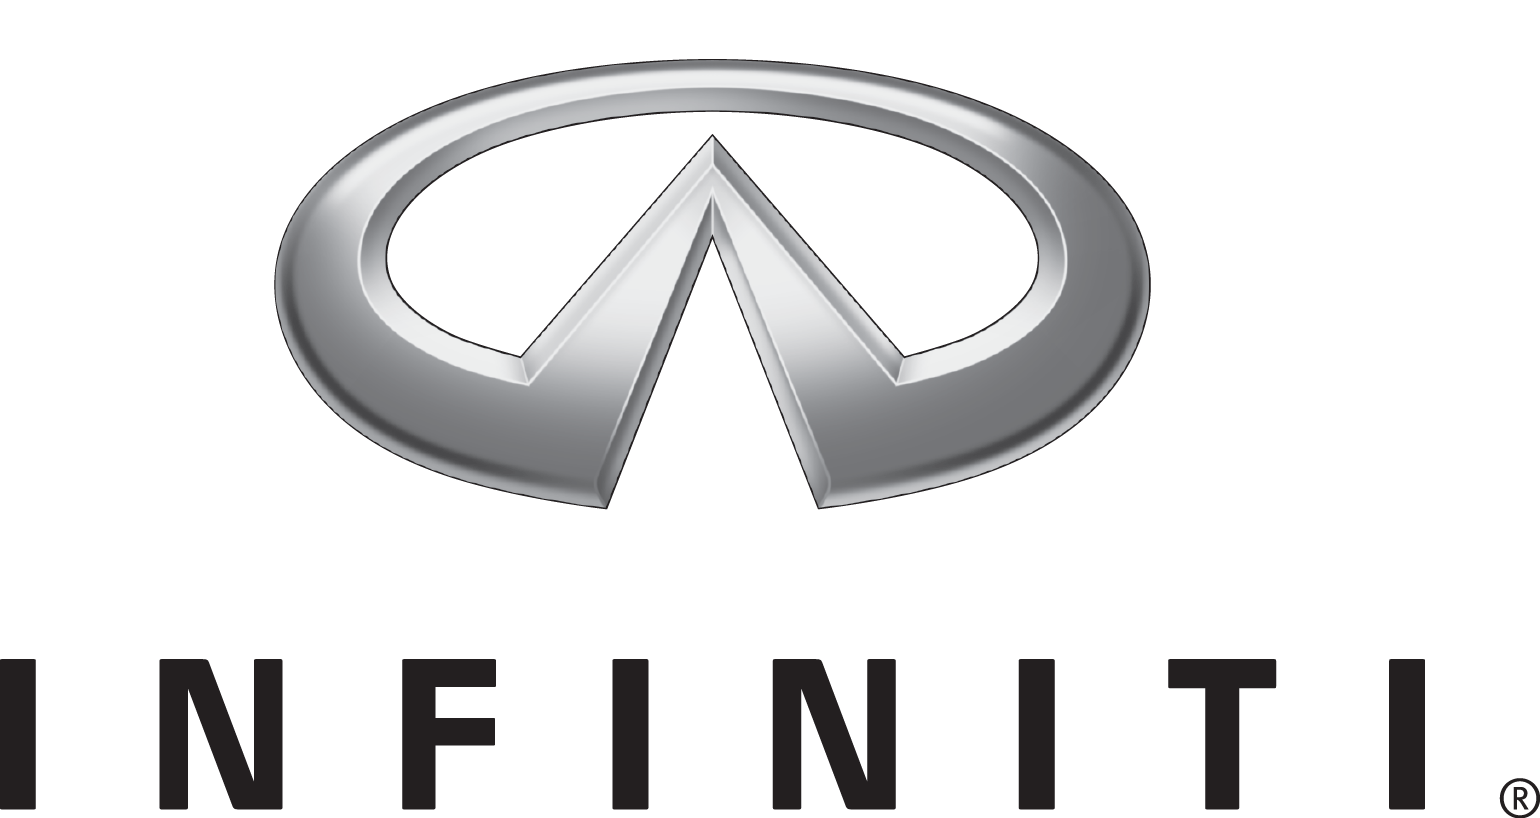 Upside Down Triangle Car Logo - Infiniti Logo, Infiniti Car Symbol Meaning and History | Car Brand ...